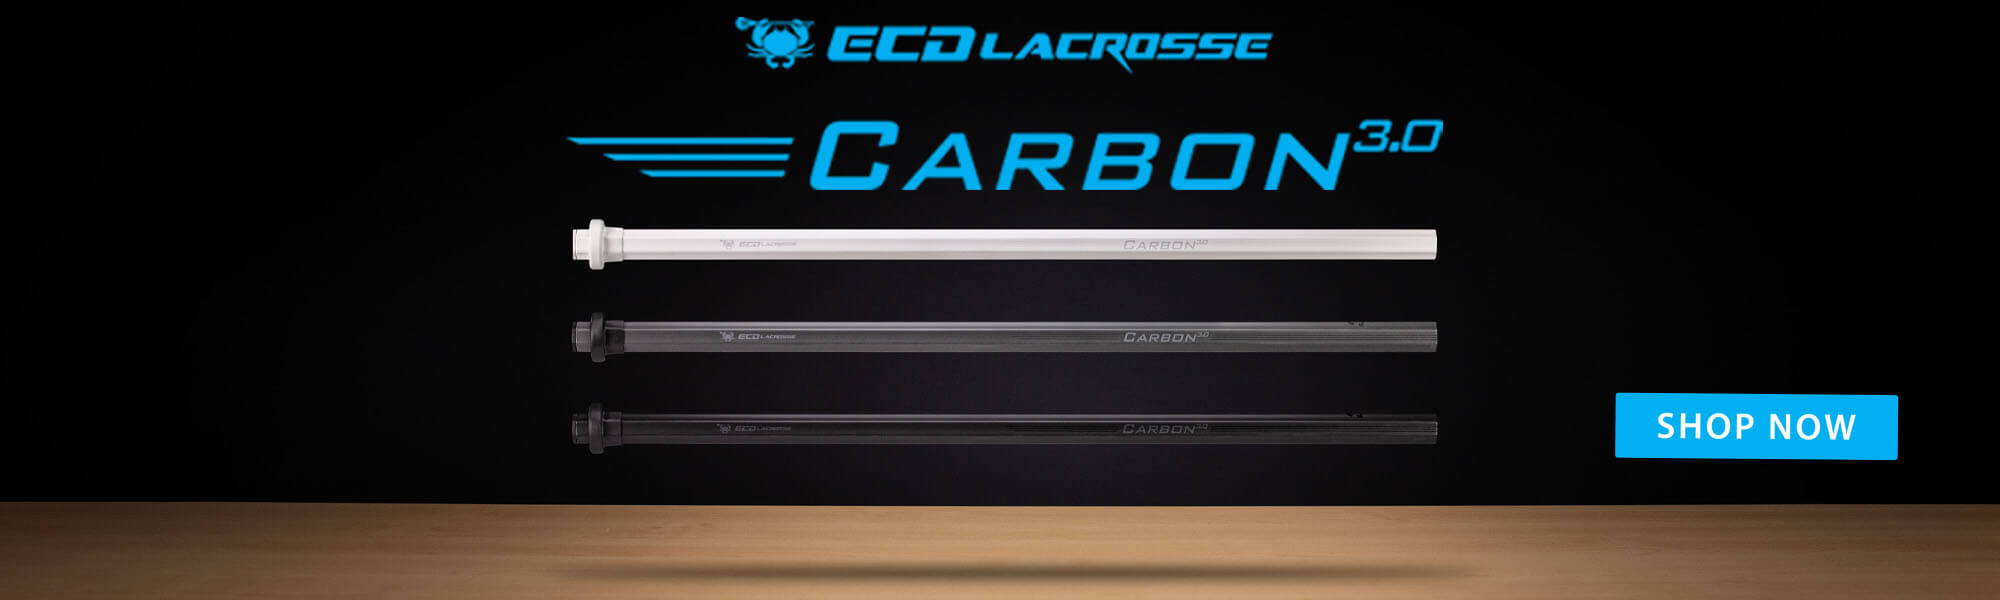 ECD CARBON 3.0 LACROSSE SHAFTS | TOP STRING LACROSSE